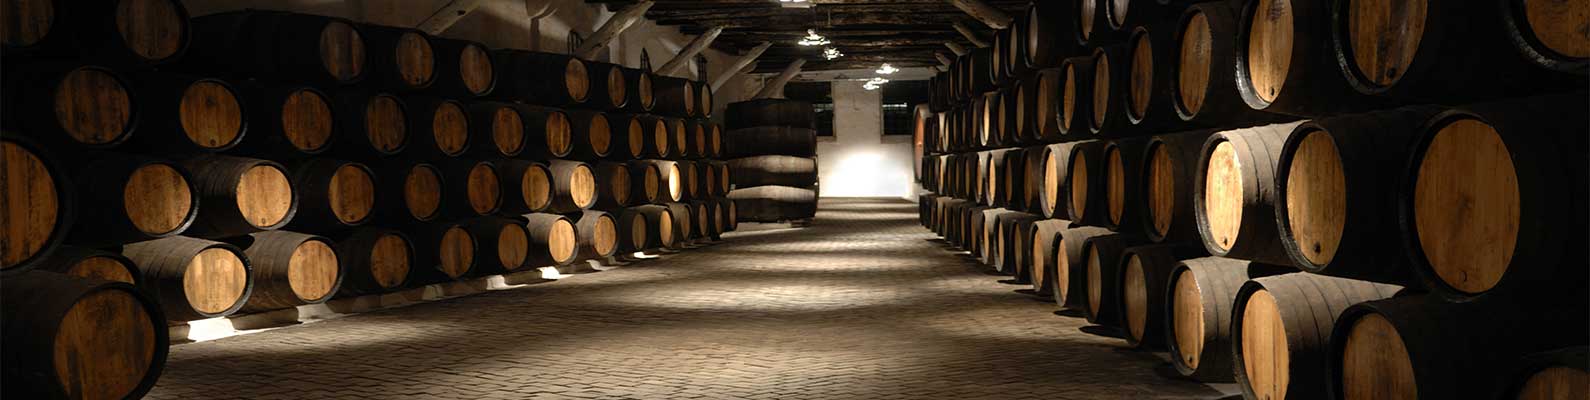 Port / Armagnac / Whisky